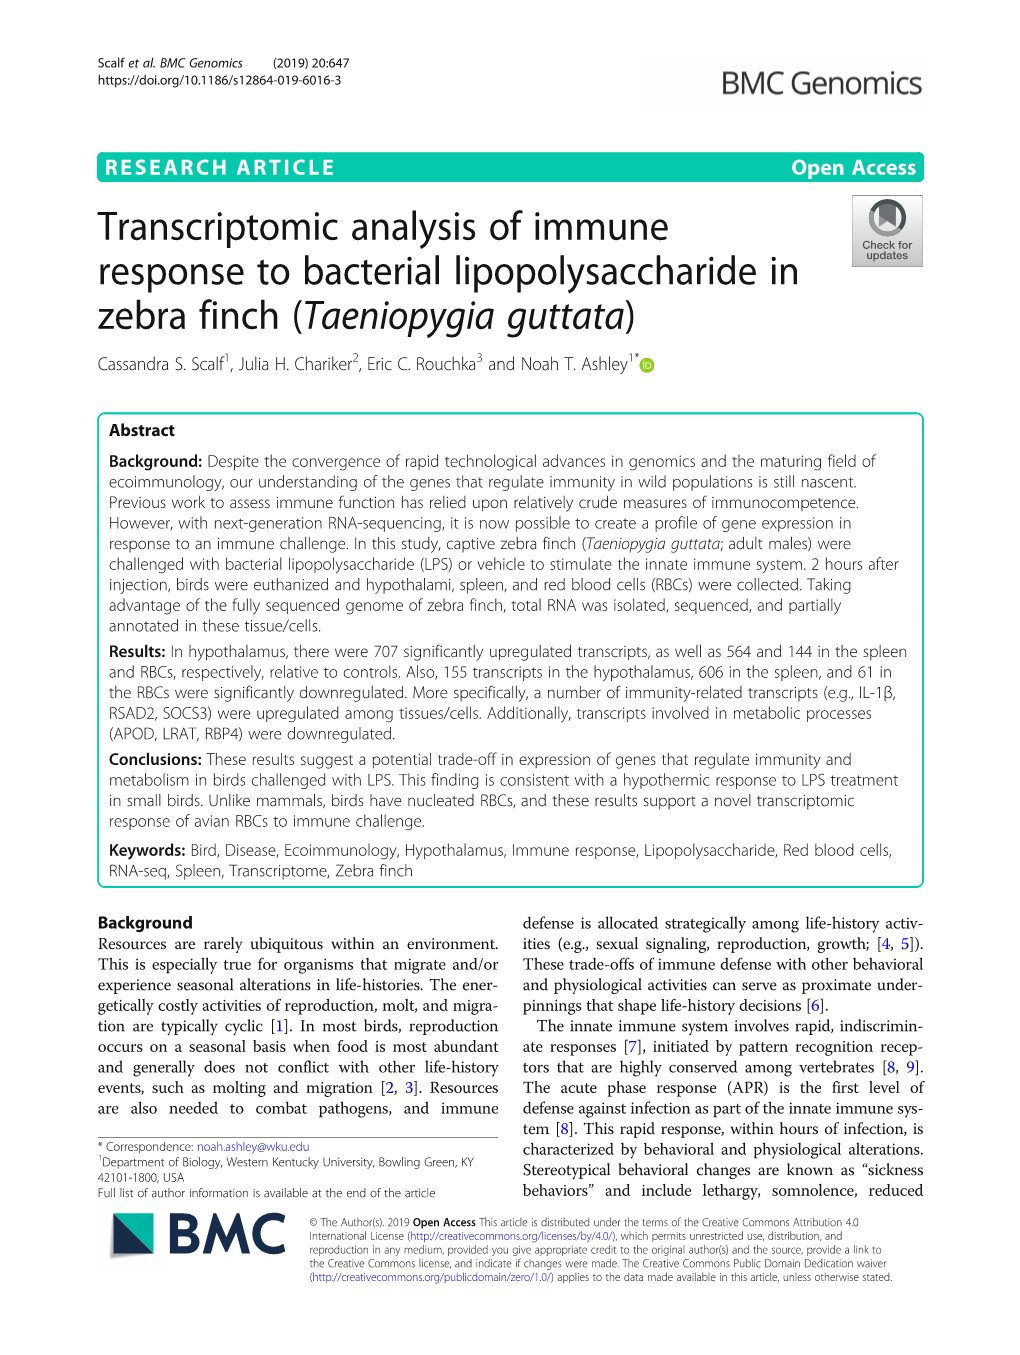 Transcriptomic Analysis of Immune Response to Bacterial Lipopolysaccharide in Zebra Finch (Taeniopygia Guttata) Cassandra S